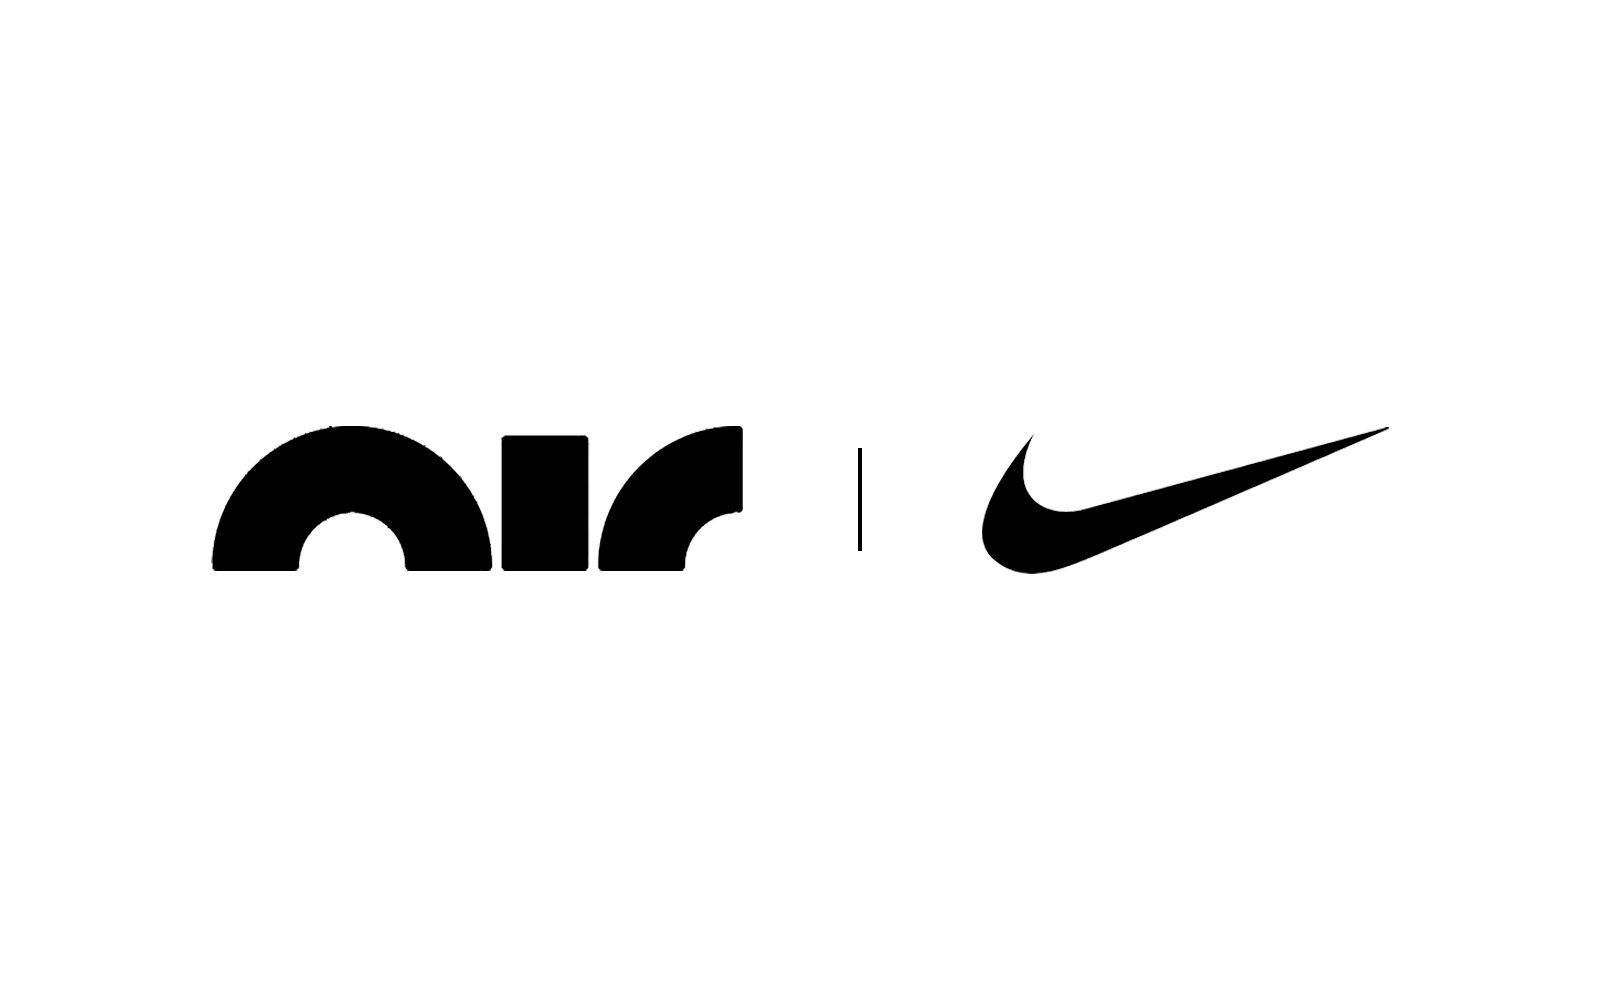 Observar agudo enchufe The new Nike Air logo